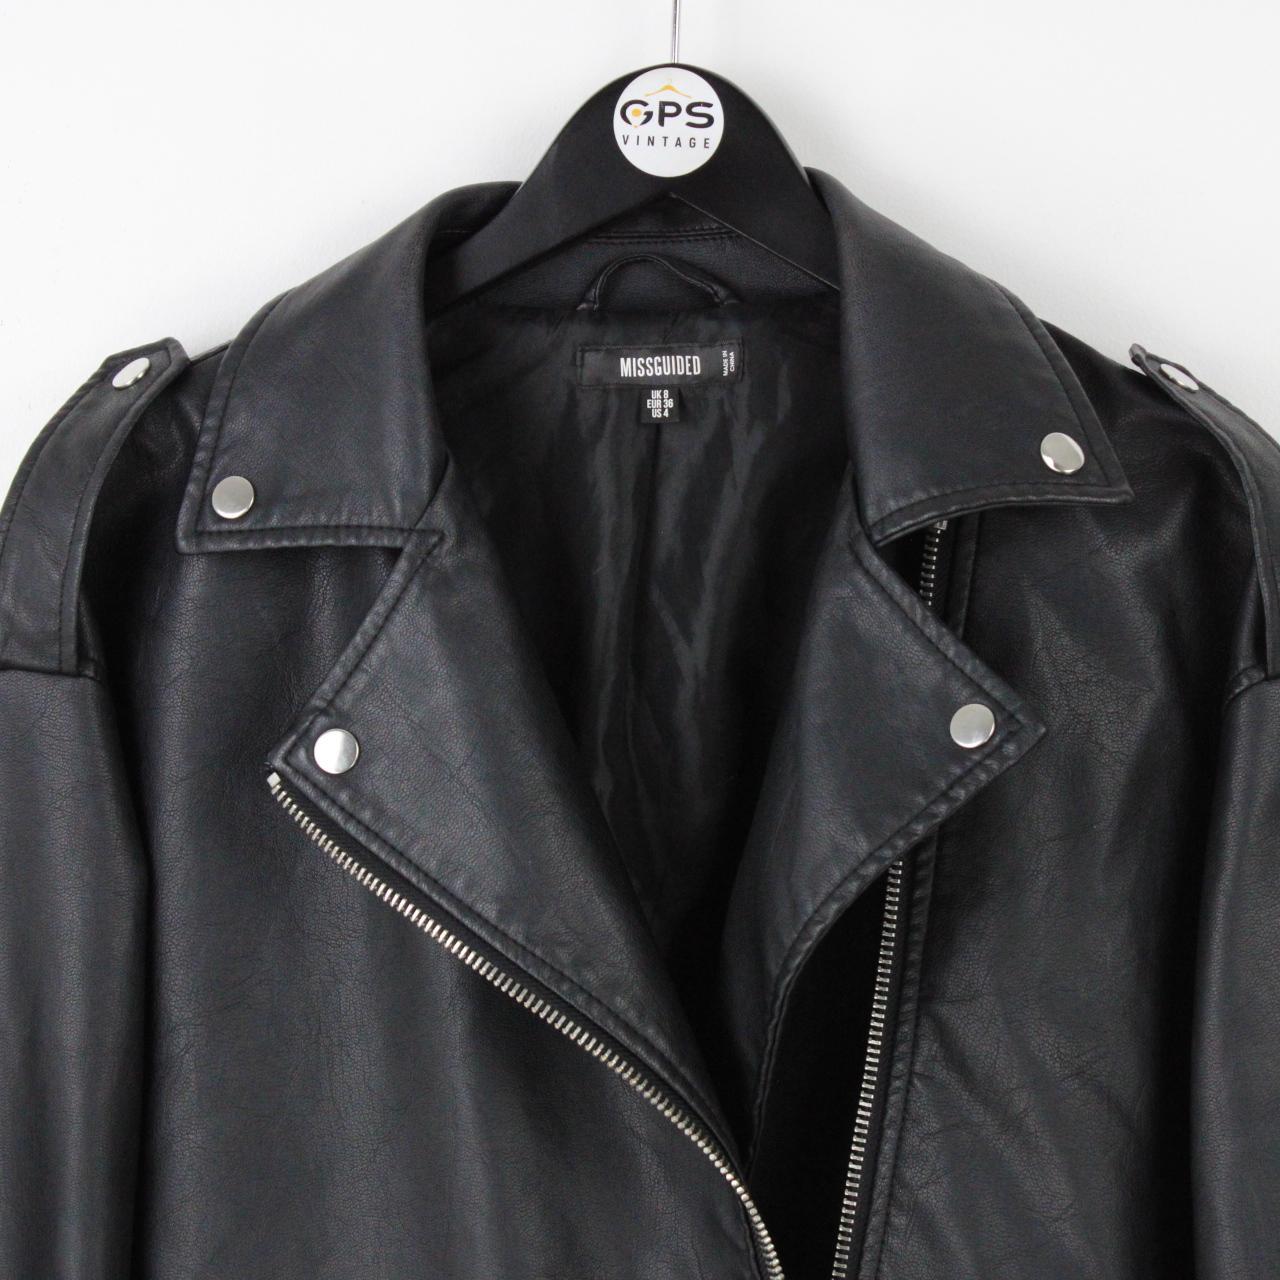 MISSGUIDED Biker Jacket Faux Leather Oversized... - Depop